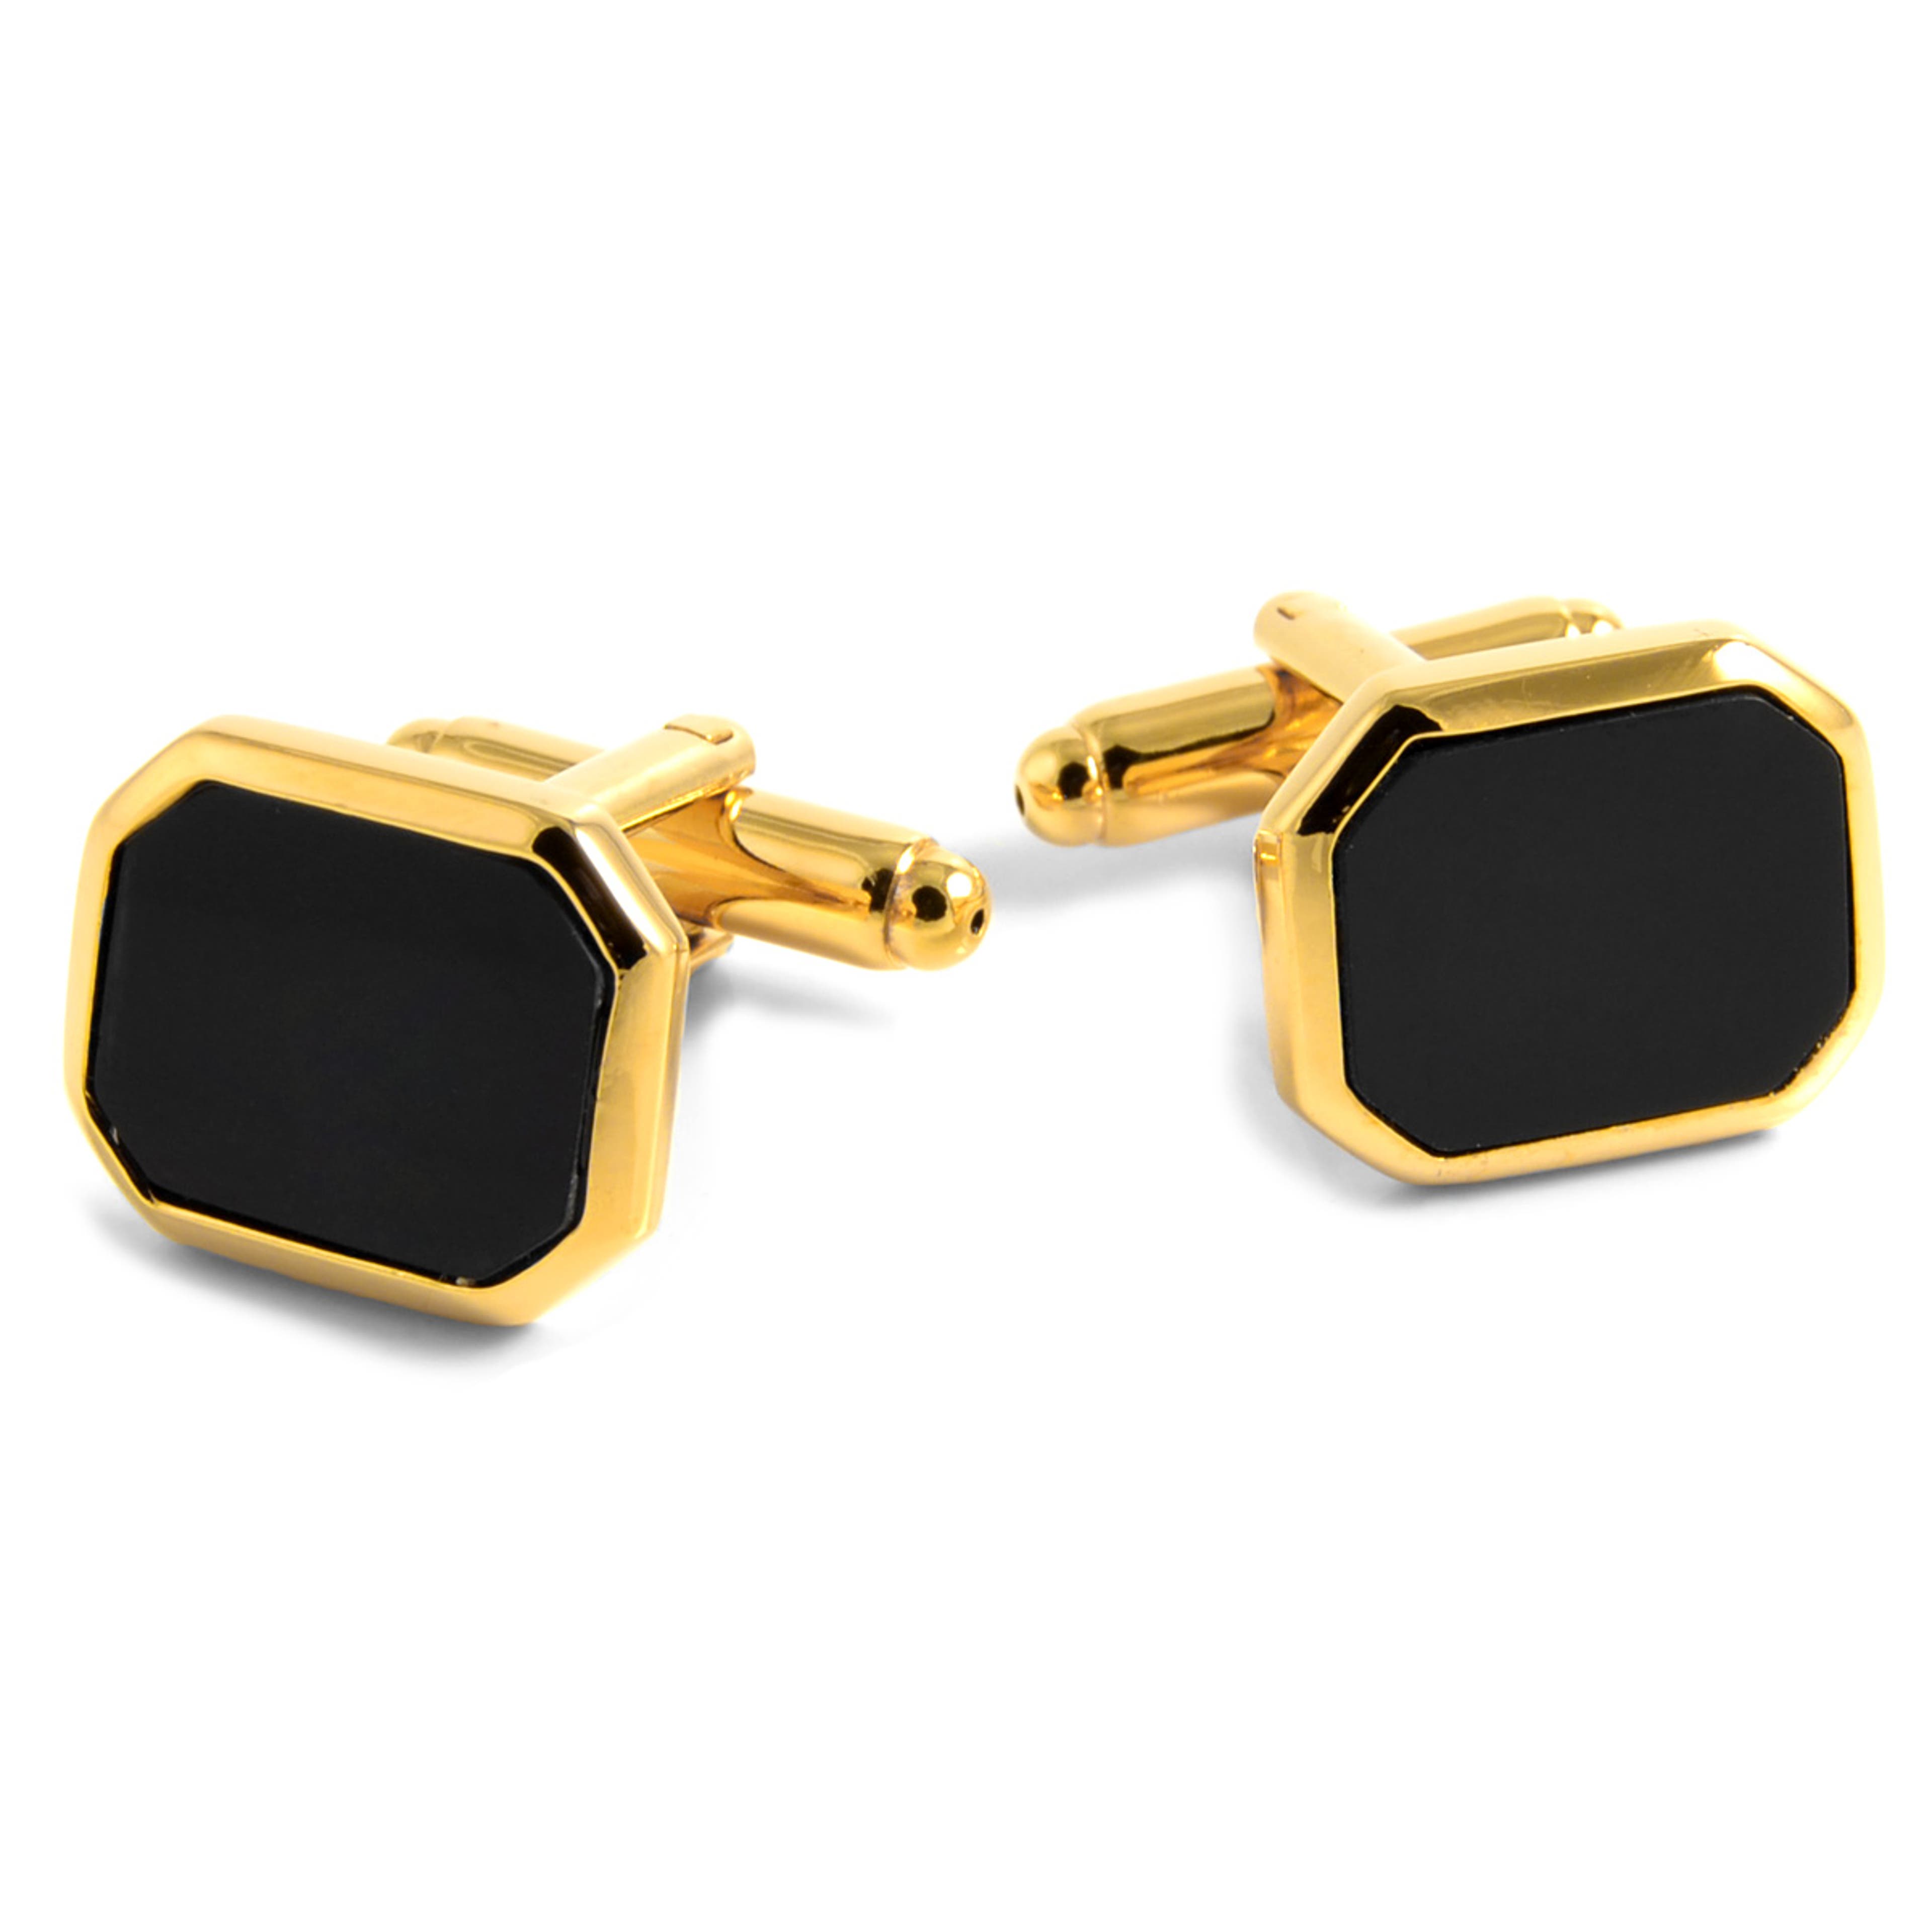 Gold-Tone & Black Stylish Octagonal Cufflinks